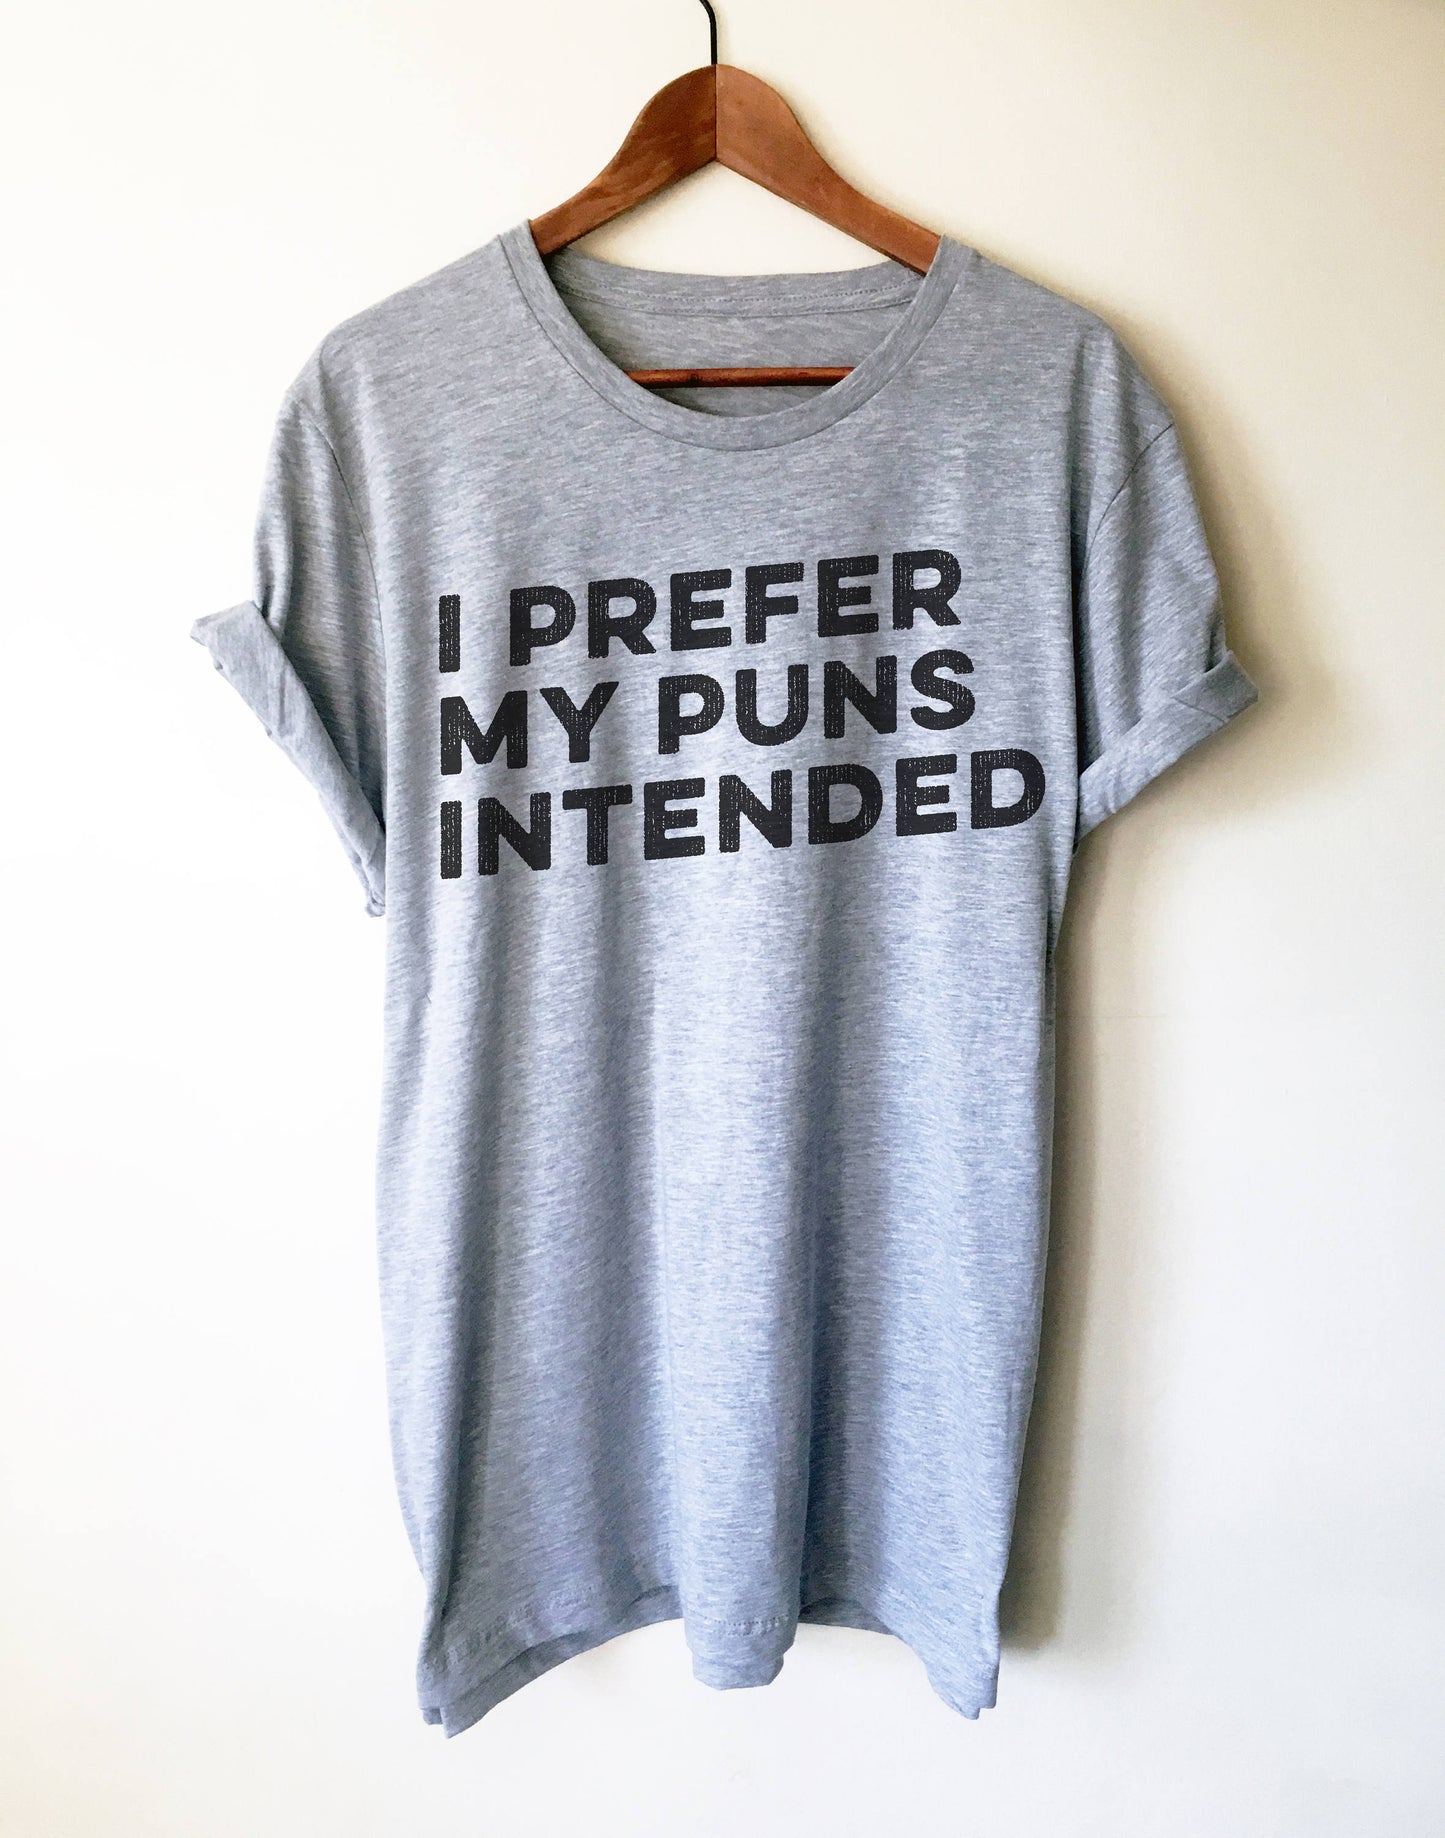 I Prefer My Puns Intended Unisex Shirt  book lover t shirts - book lover gift - bookworm gift - bibliophile - Grammar Vocabulary Punctuation